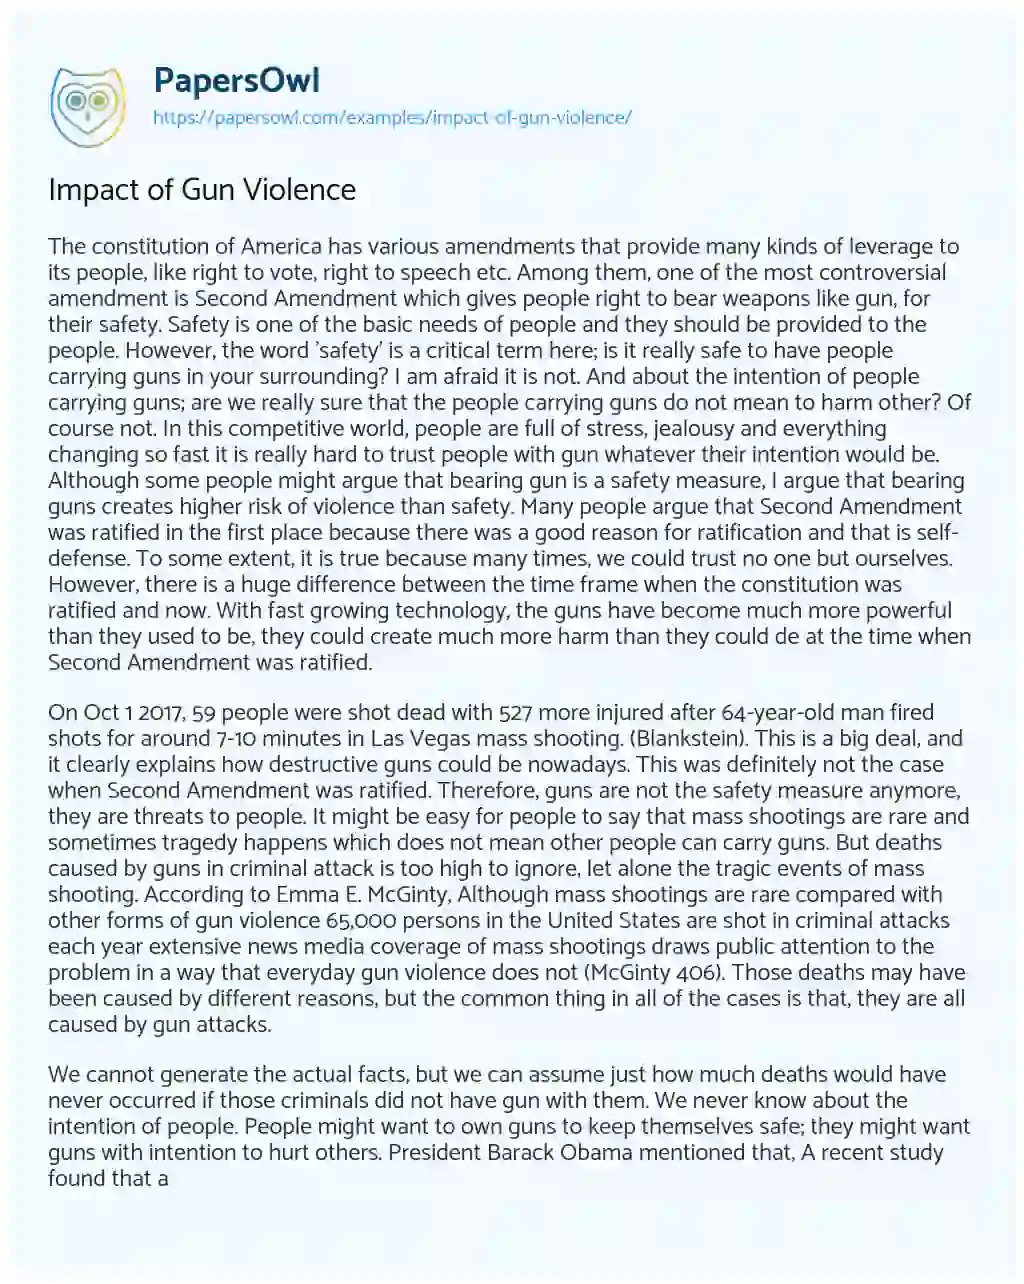 Essay on Impact of Gun Violence